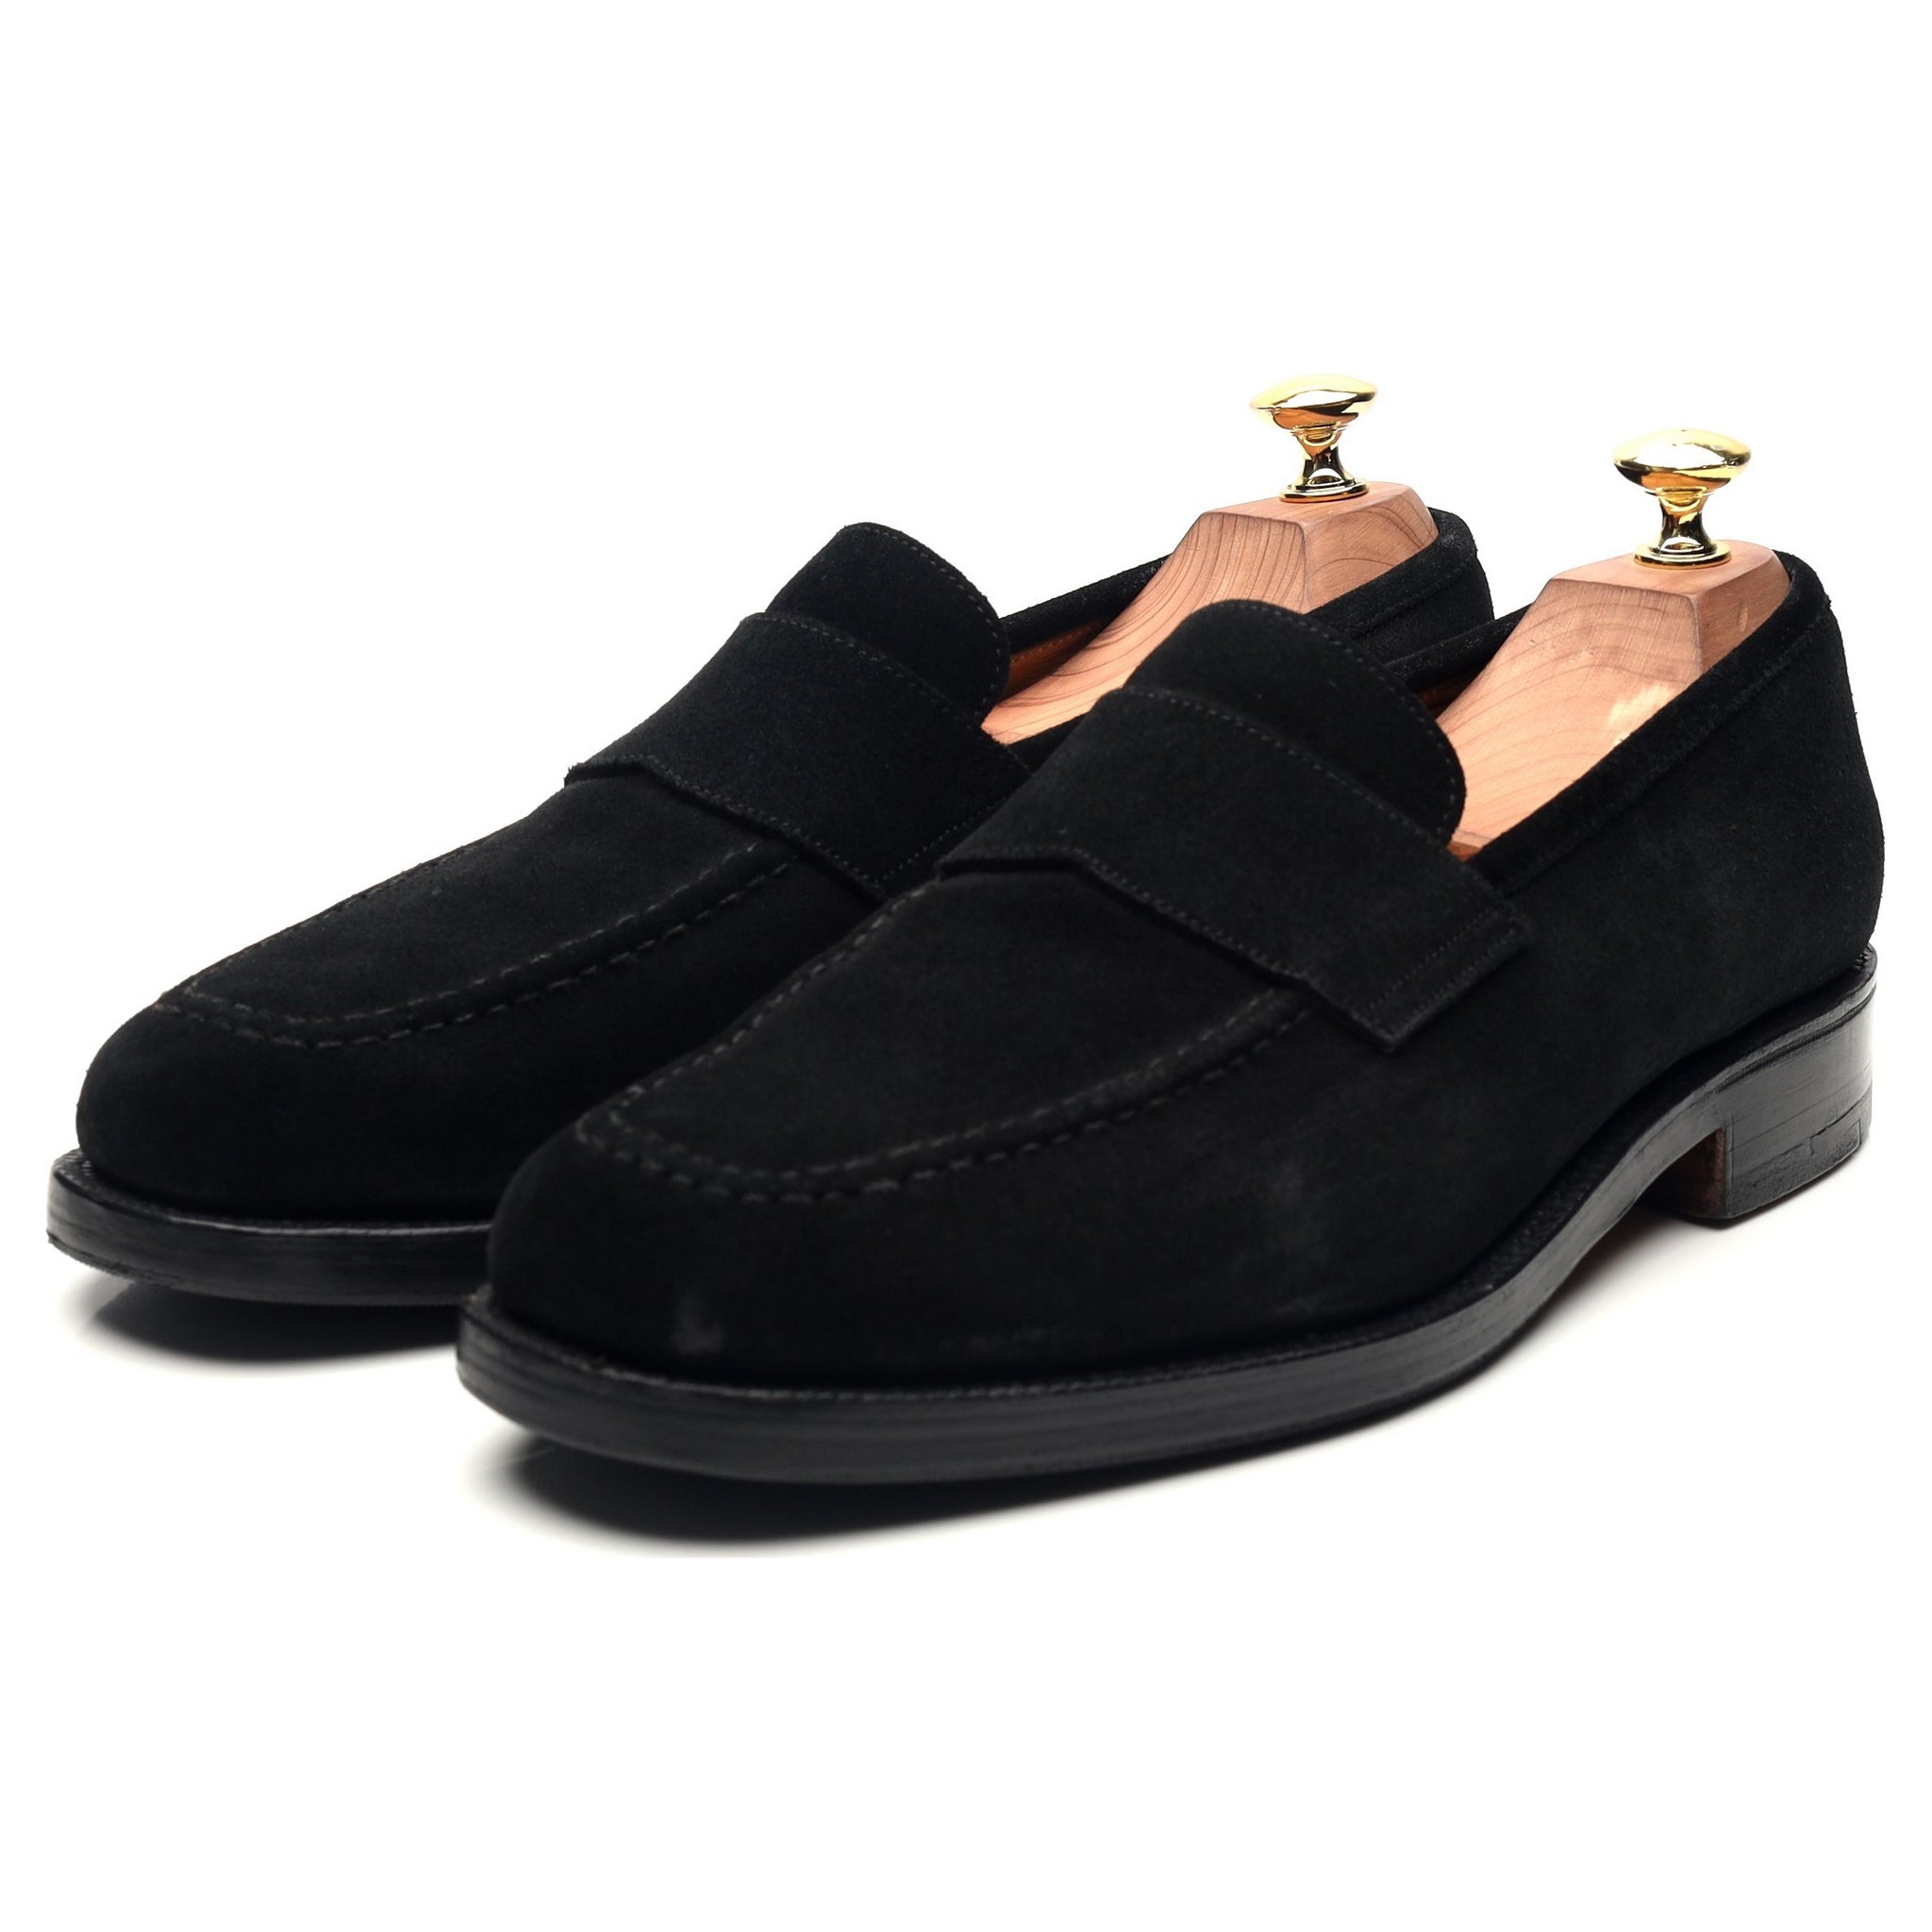 Denham' Black Leather Loafers UK 8.5 E - Abbot's Shoes